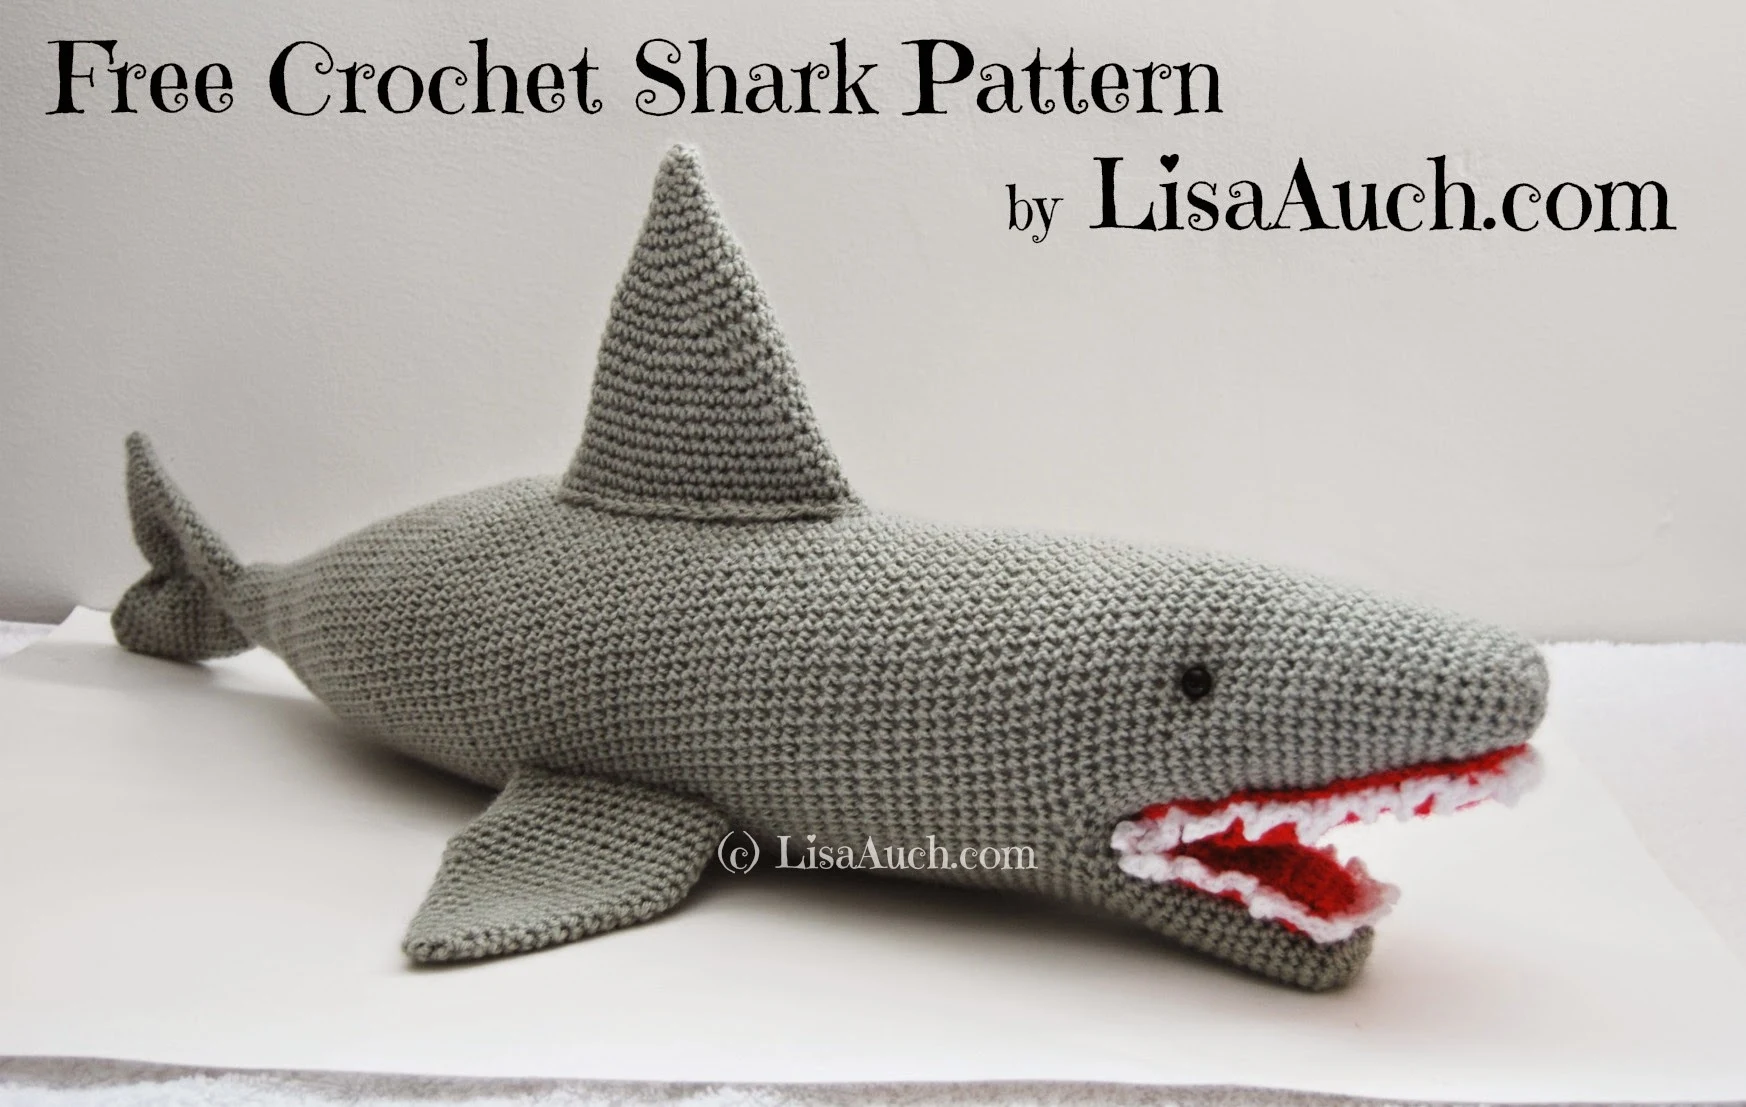 LARGE crochet shark pattern free